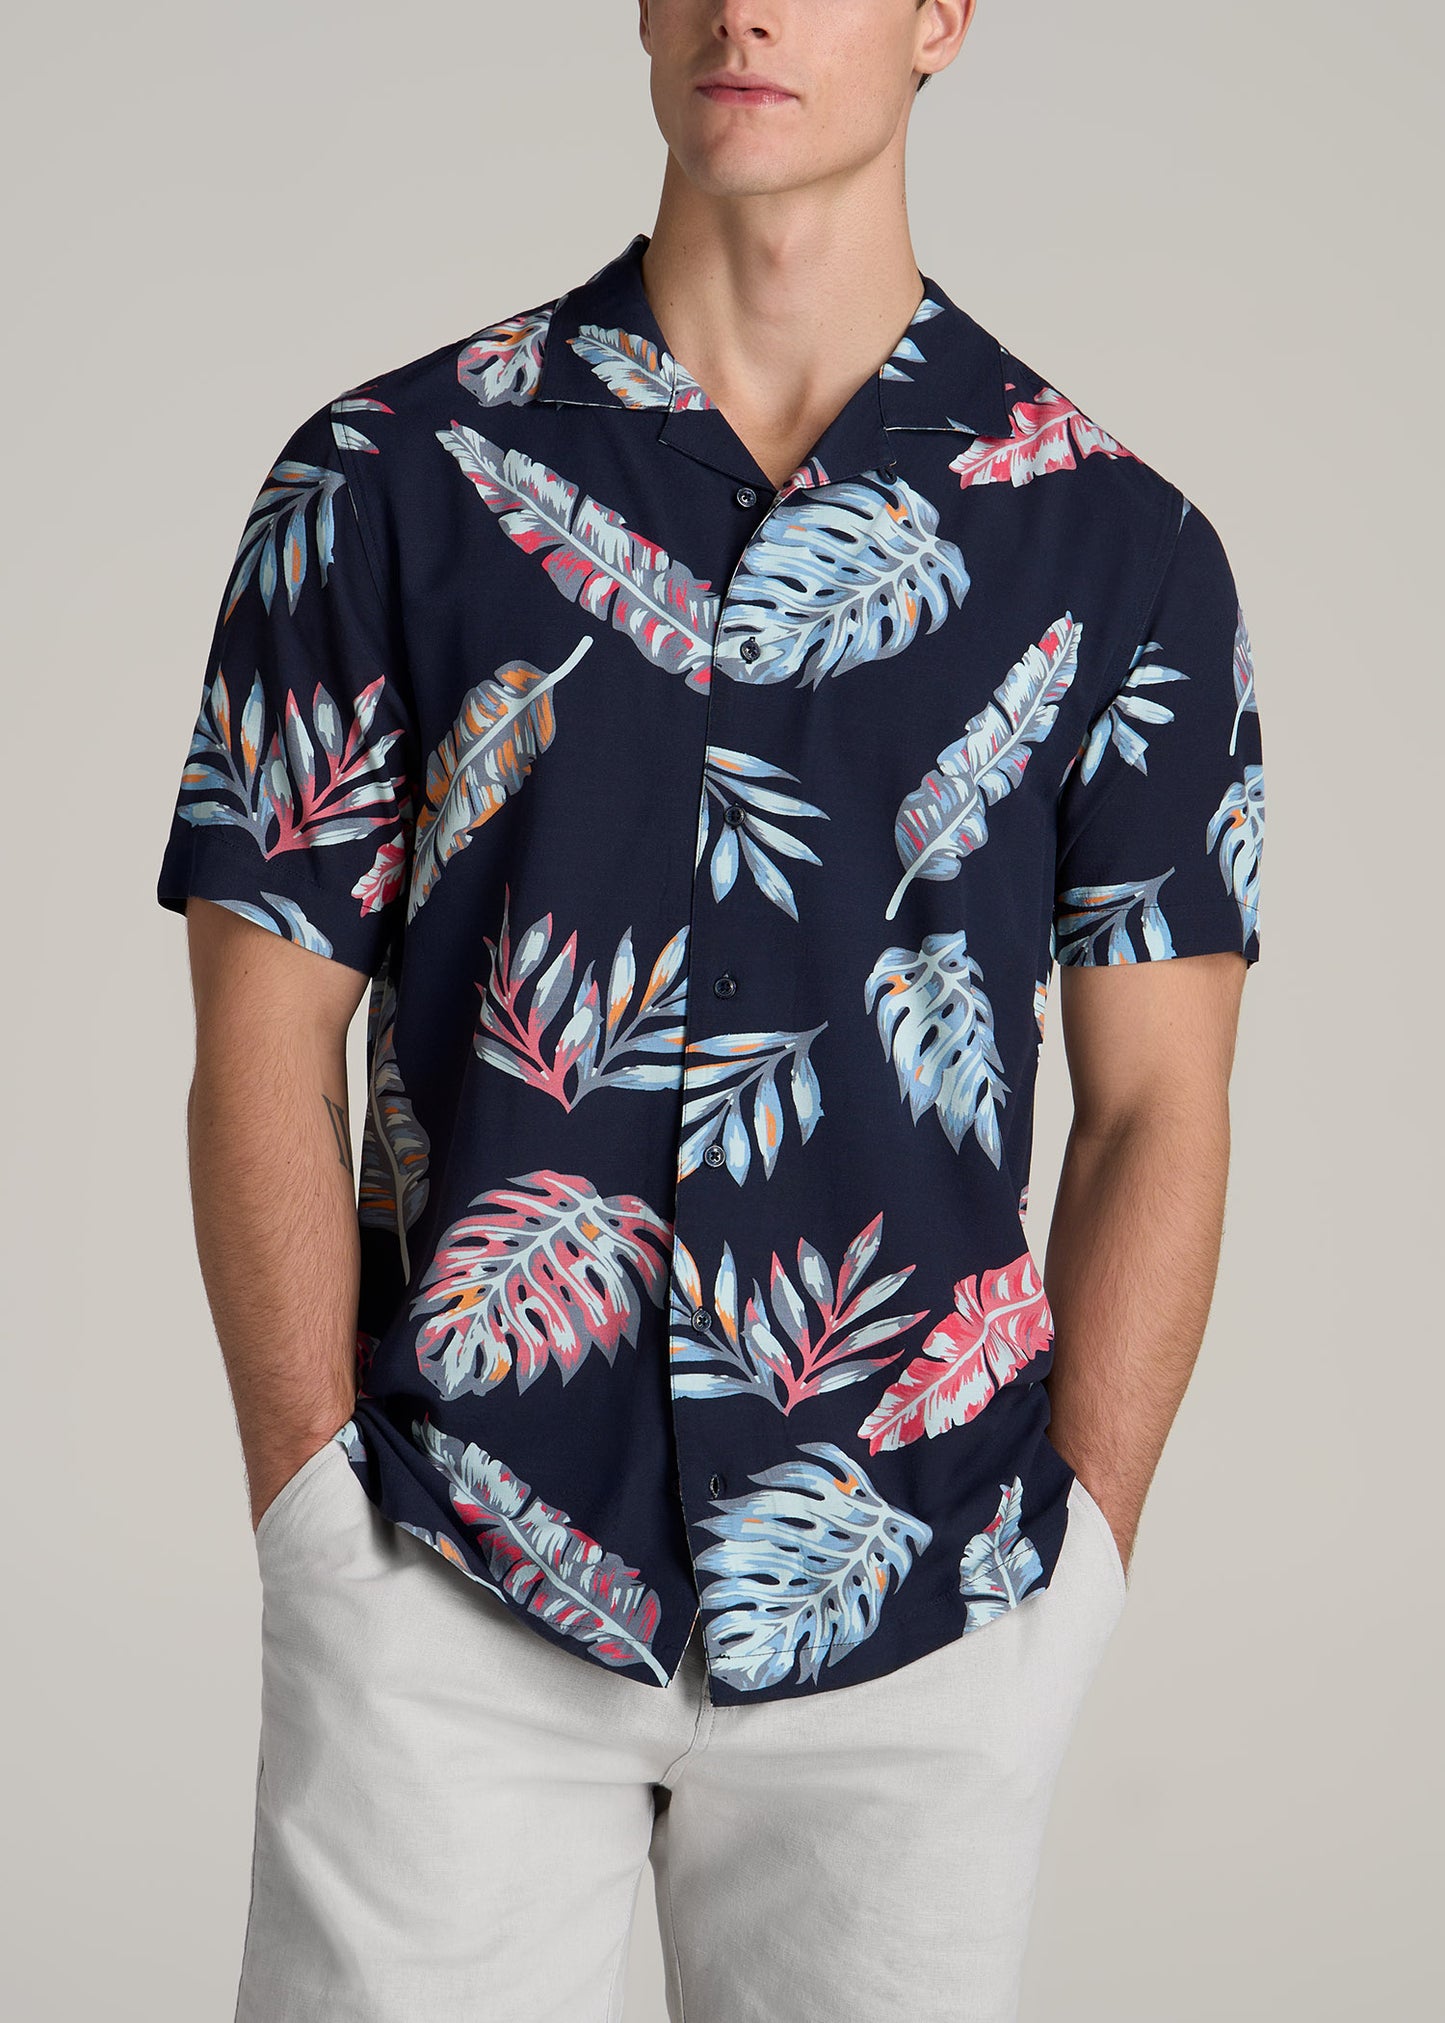 Short Sleeve Resort Shirt for Tall Men in Indigo Floral Print